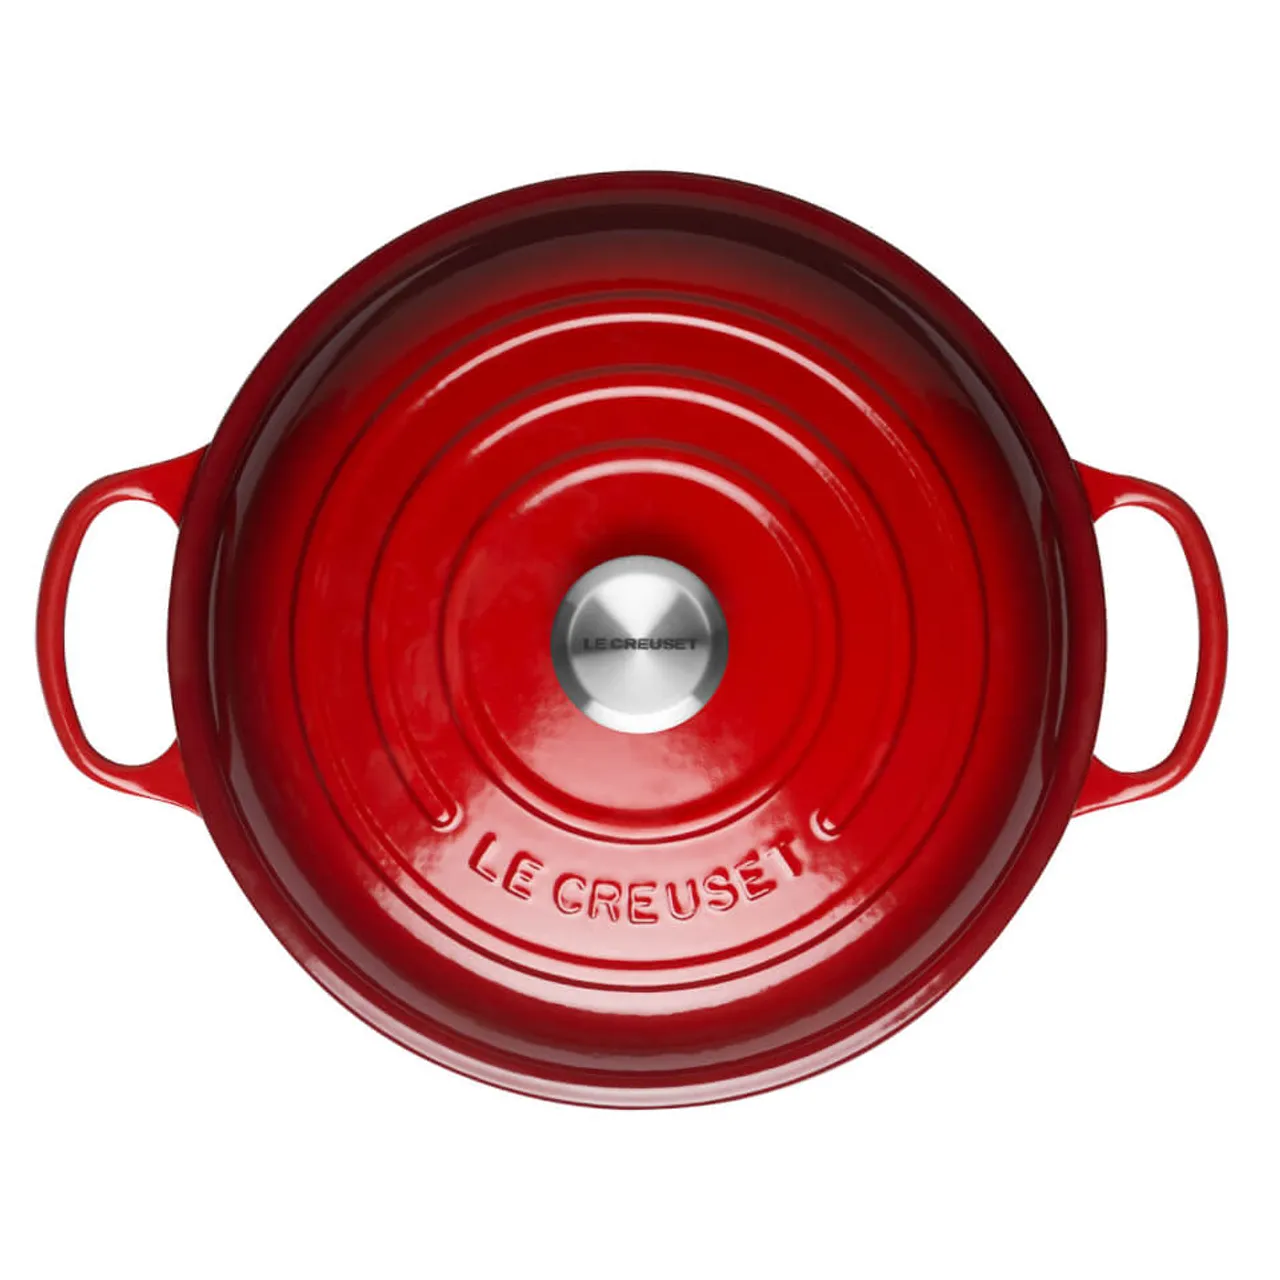 Le Creuset Signature Cast Iron Shallow Casserole Dish - 30cm - Cerise